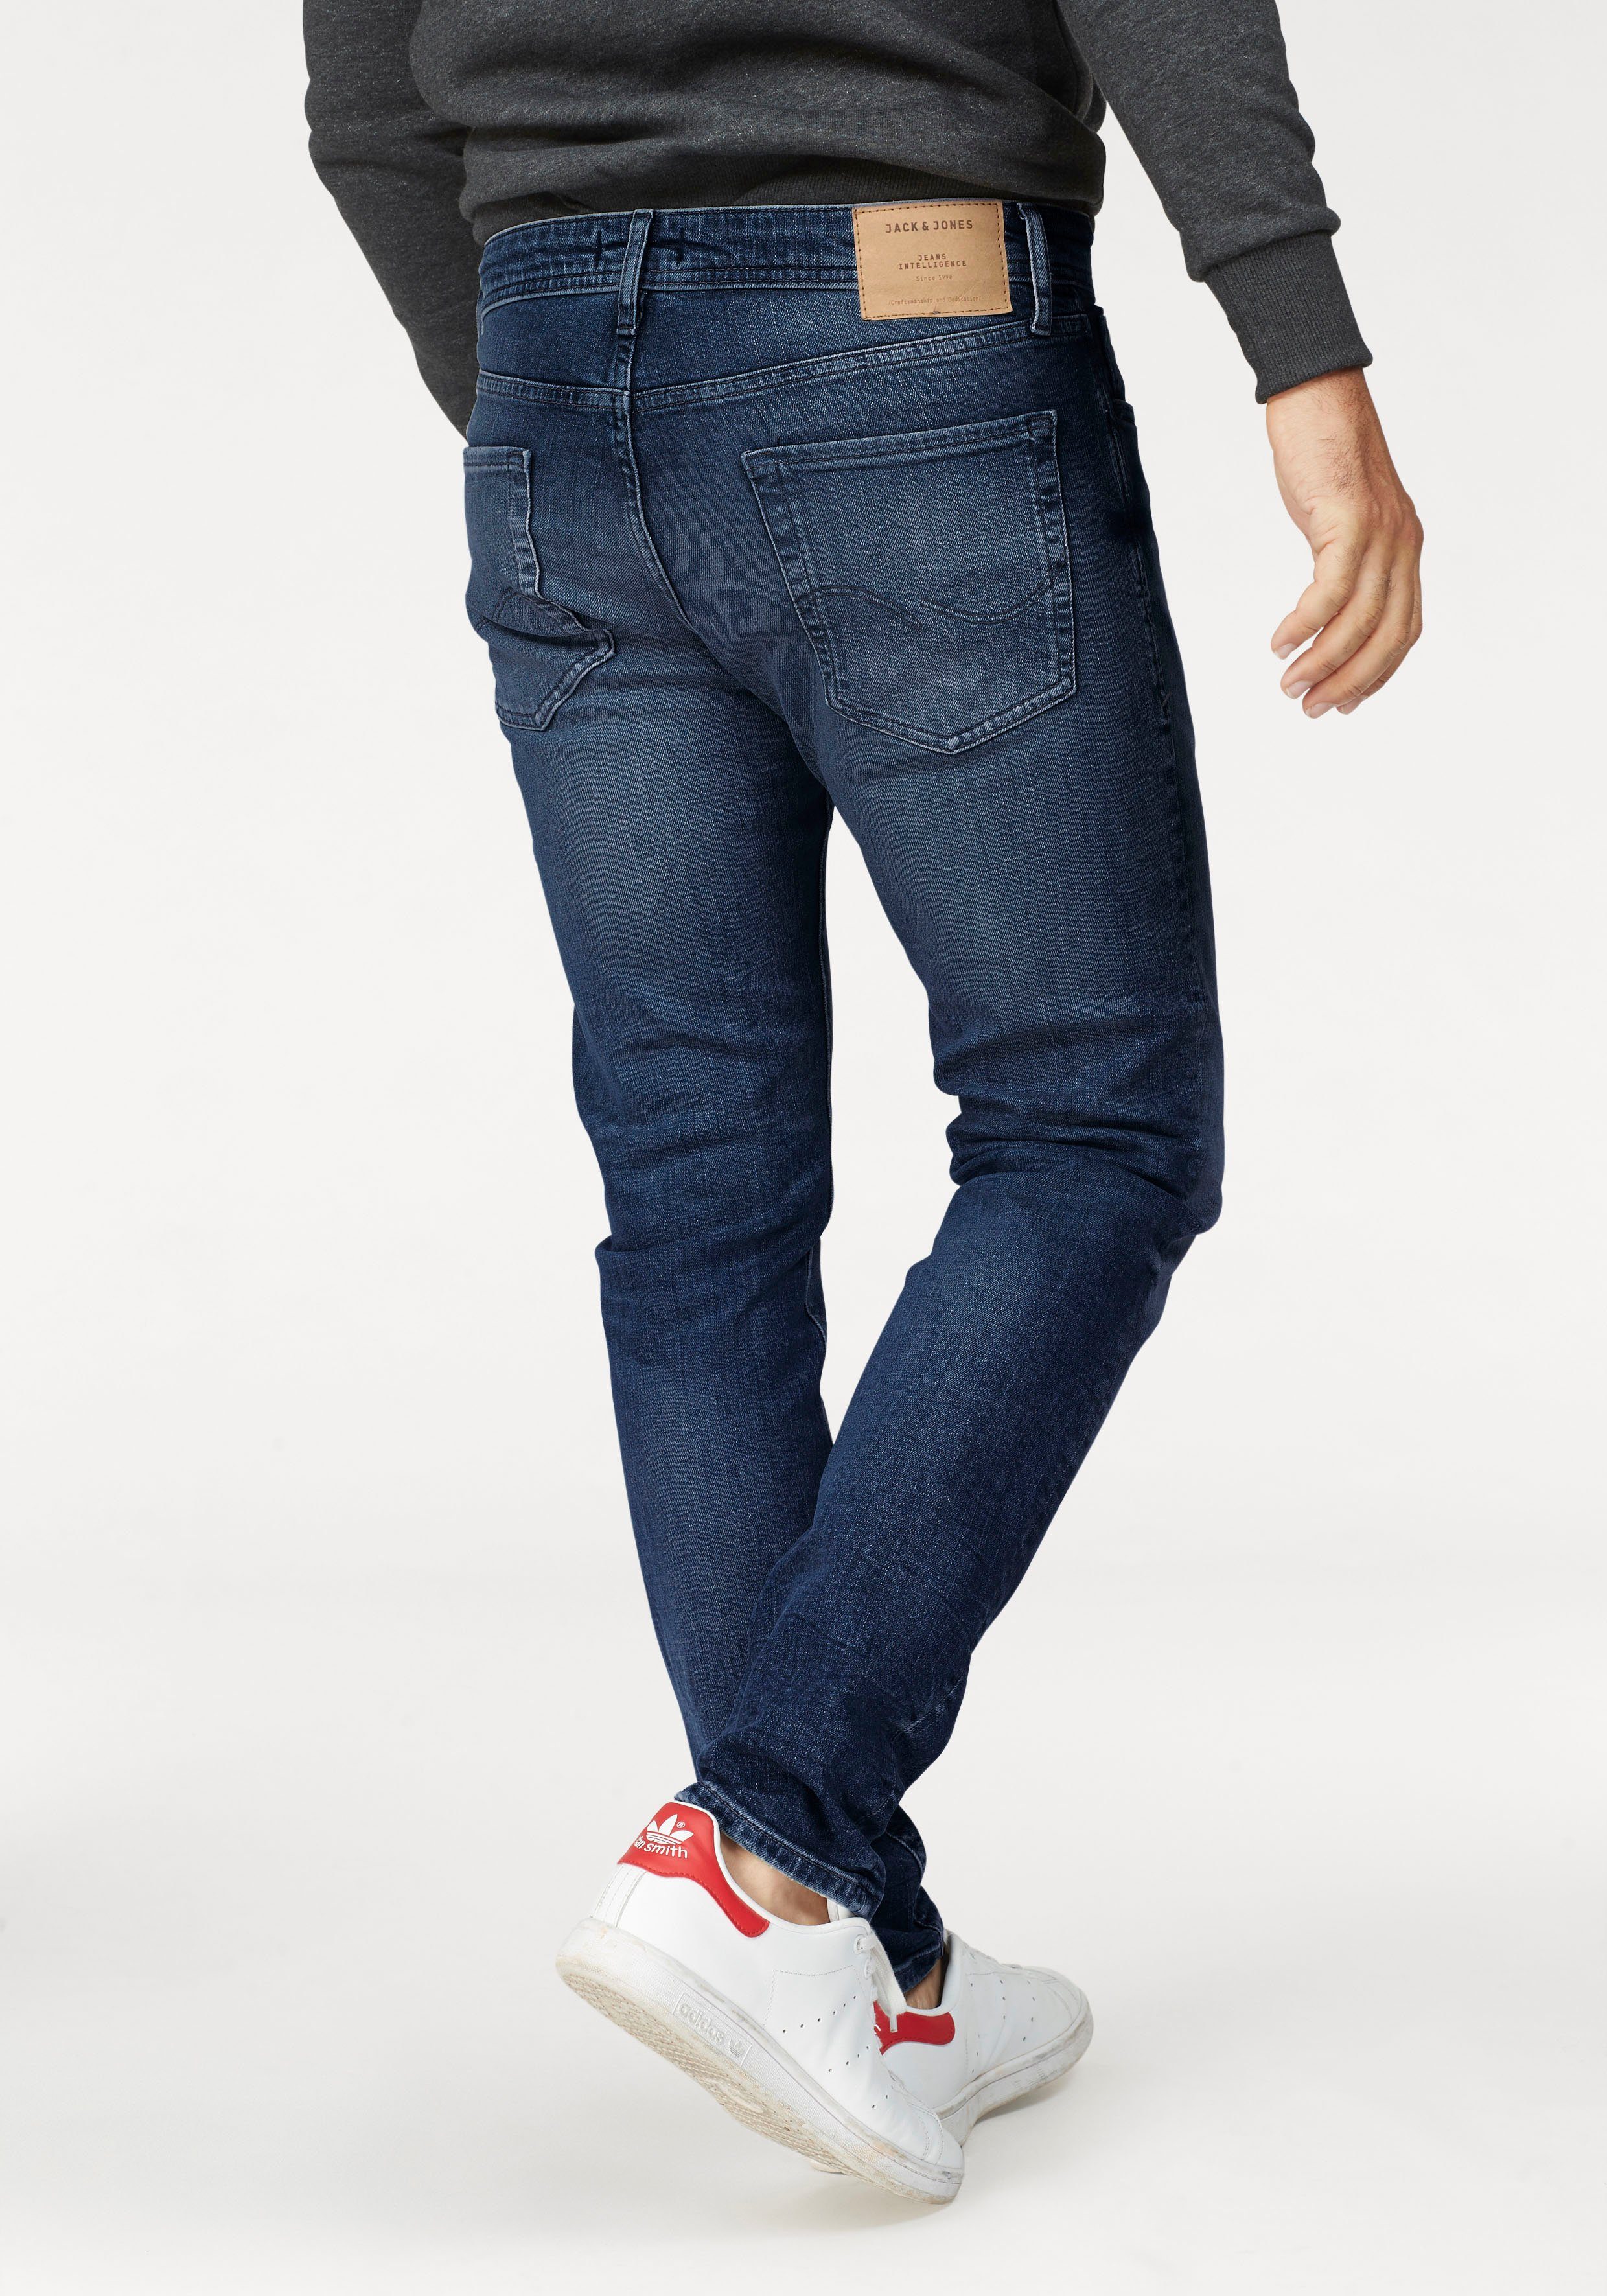 Reich Penetration Cliff comfort fit jeans Horizont eine Billion Gehalt